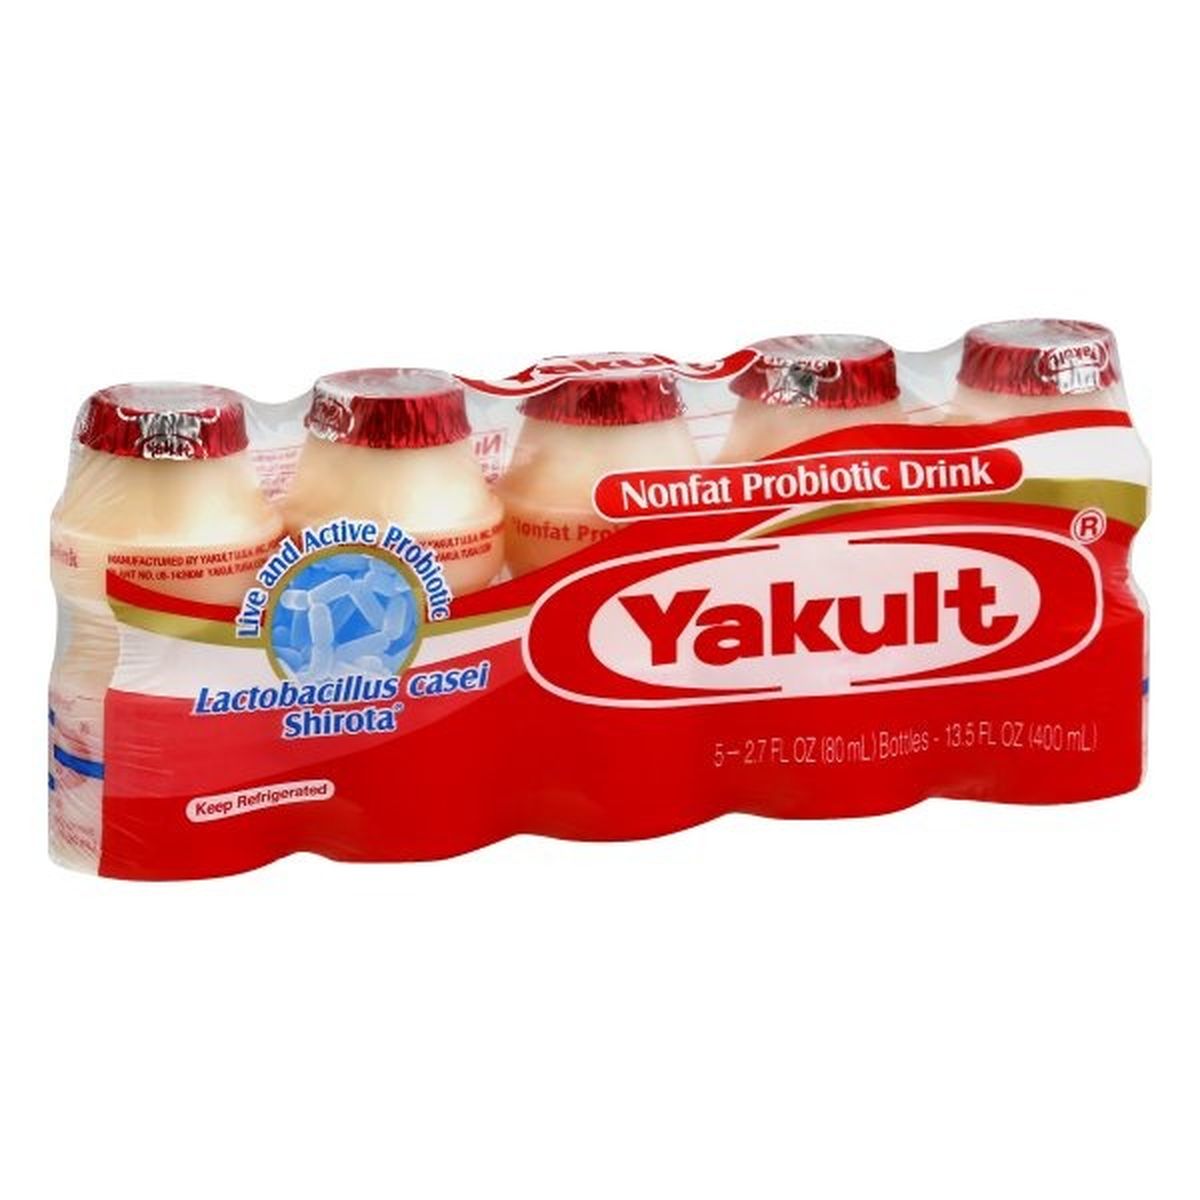 Calories in Yakult Probiotic Drink, Nonfat